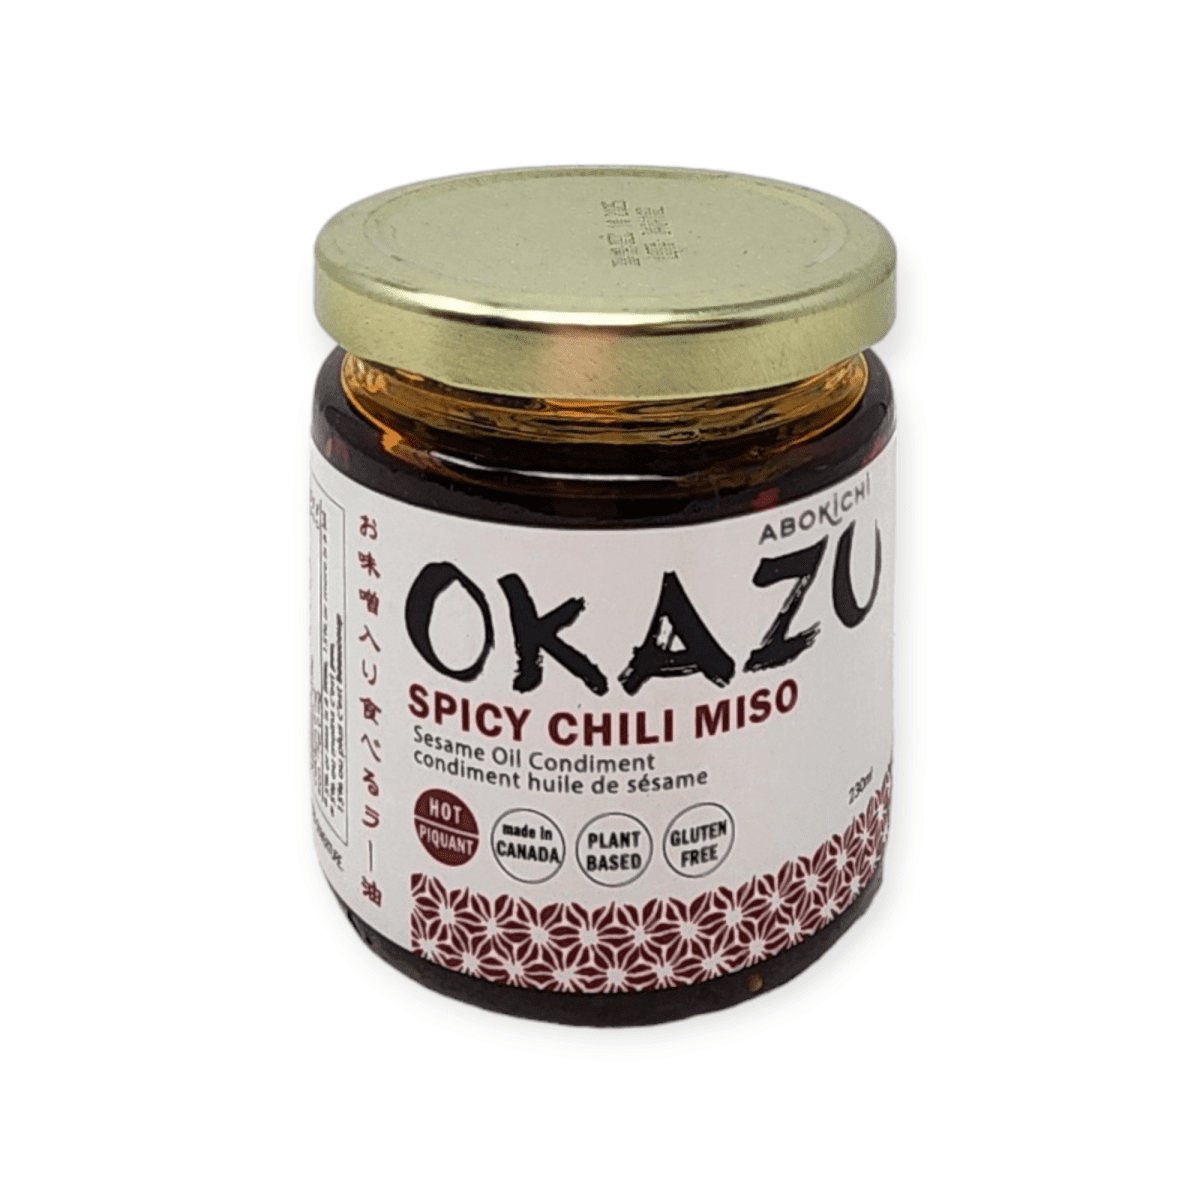 Okazu Spicy Chili Miso (230mL)